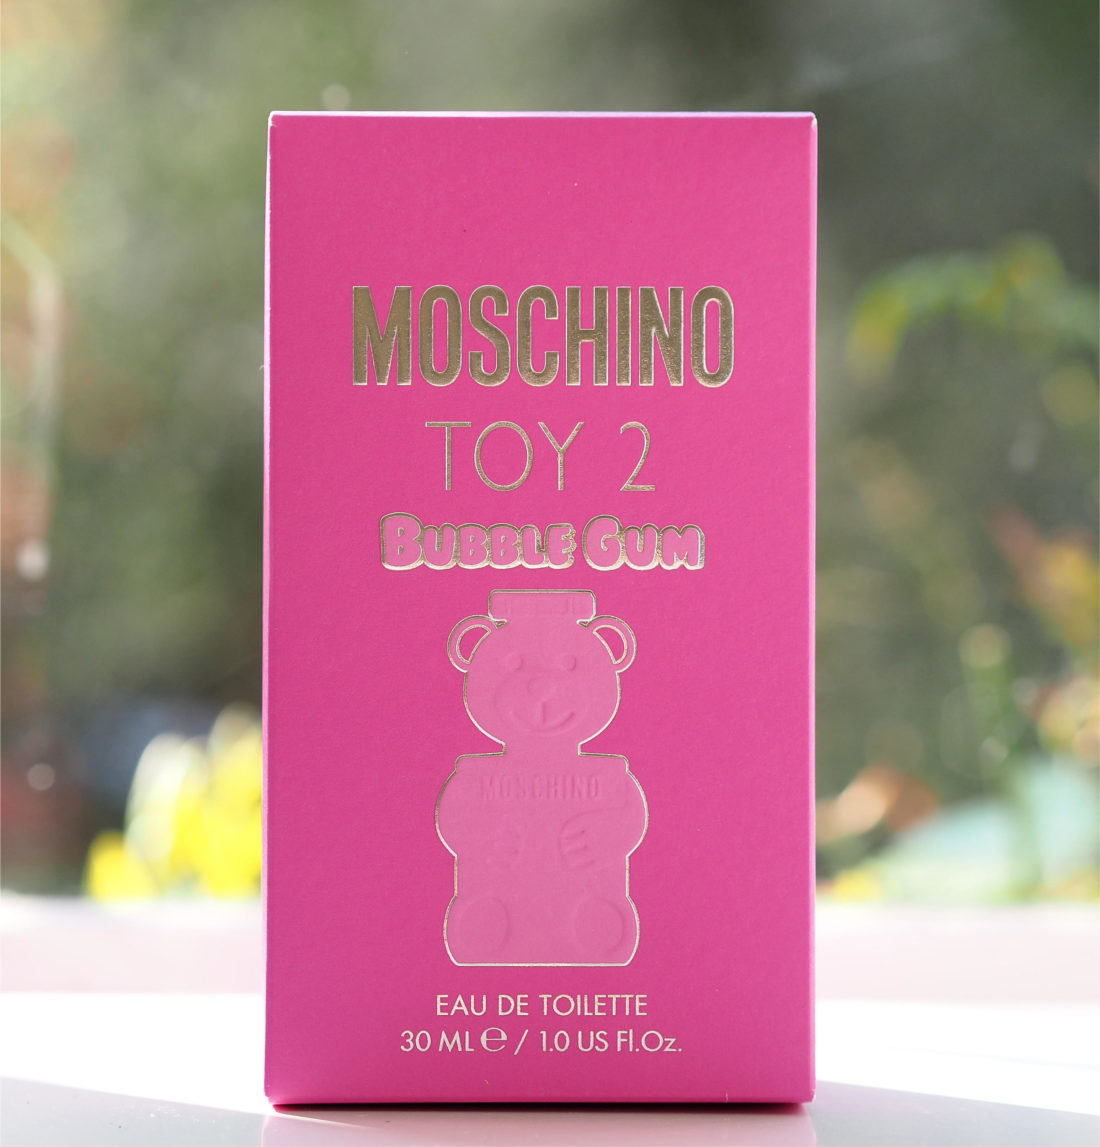 Moschino Toy 2 Bubble Gum - Fyne Fettle